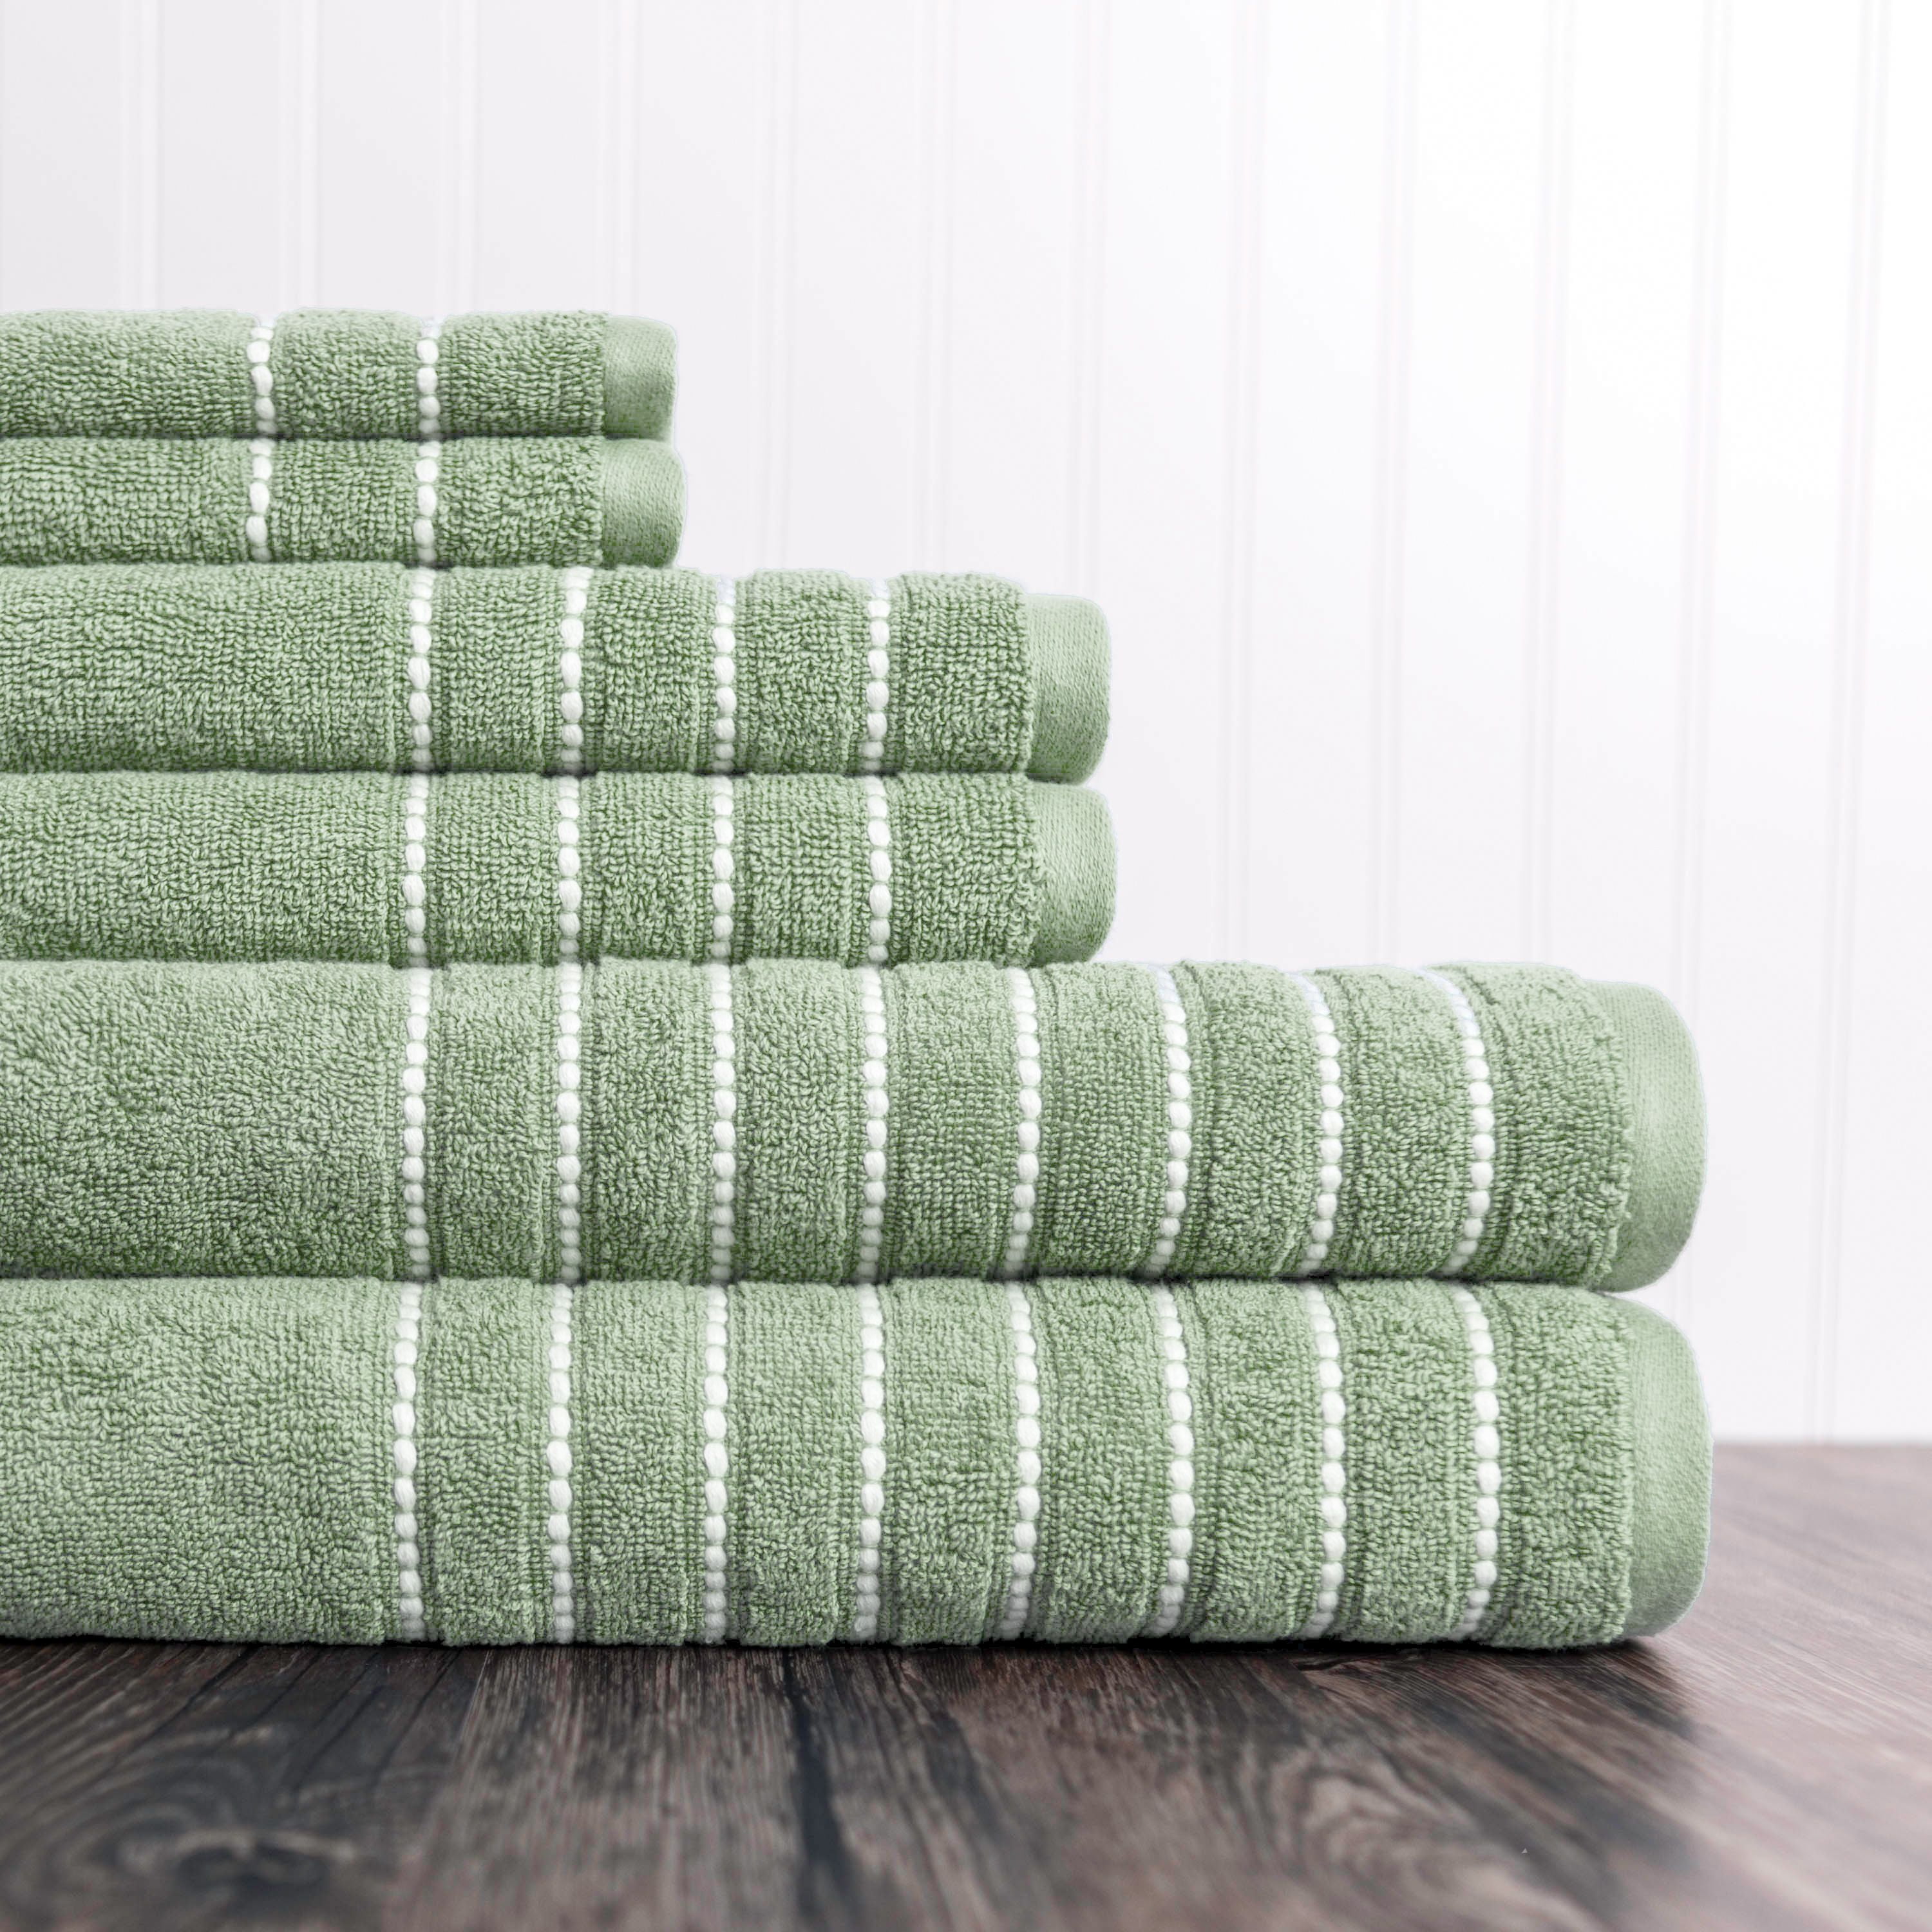 Plush Hotel Towels by ADI